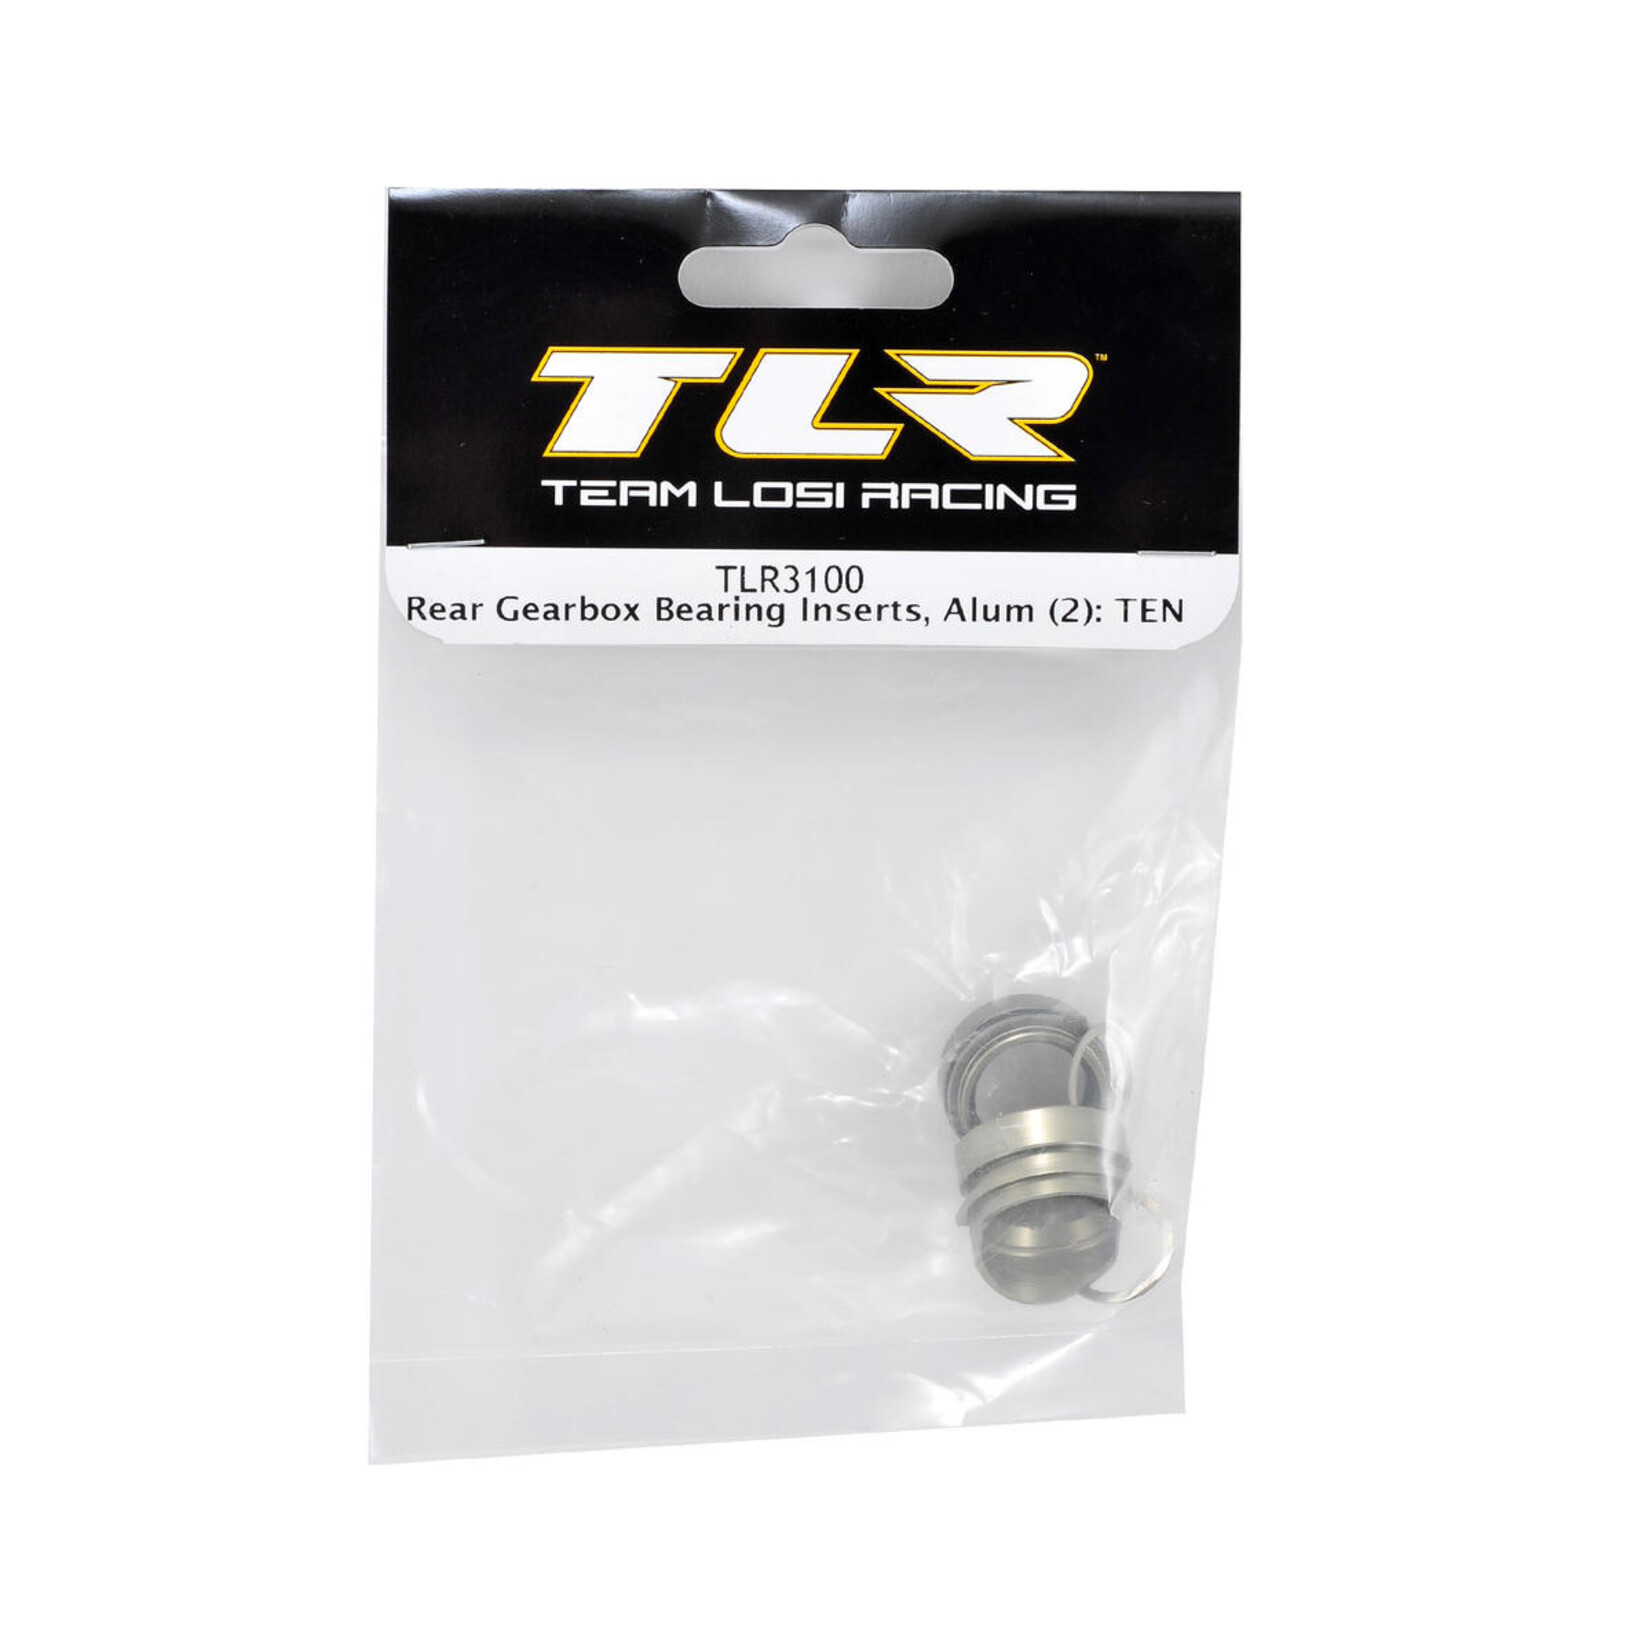 TLR Team Losi Racing Aluminum Rear Gearbox Bearing Insert Set (2) #TLR3100